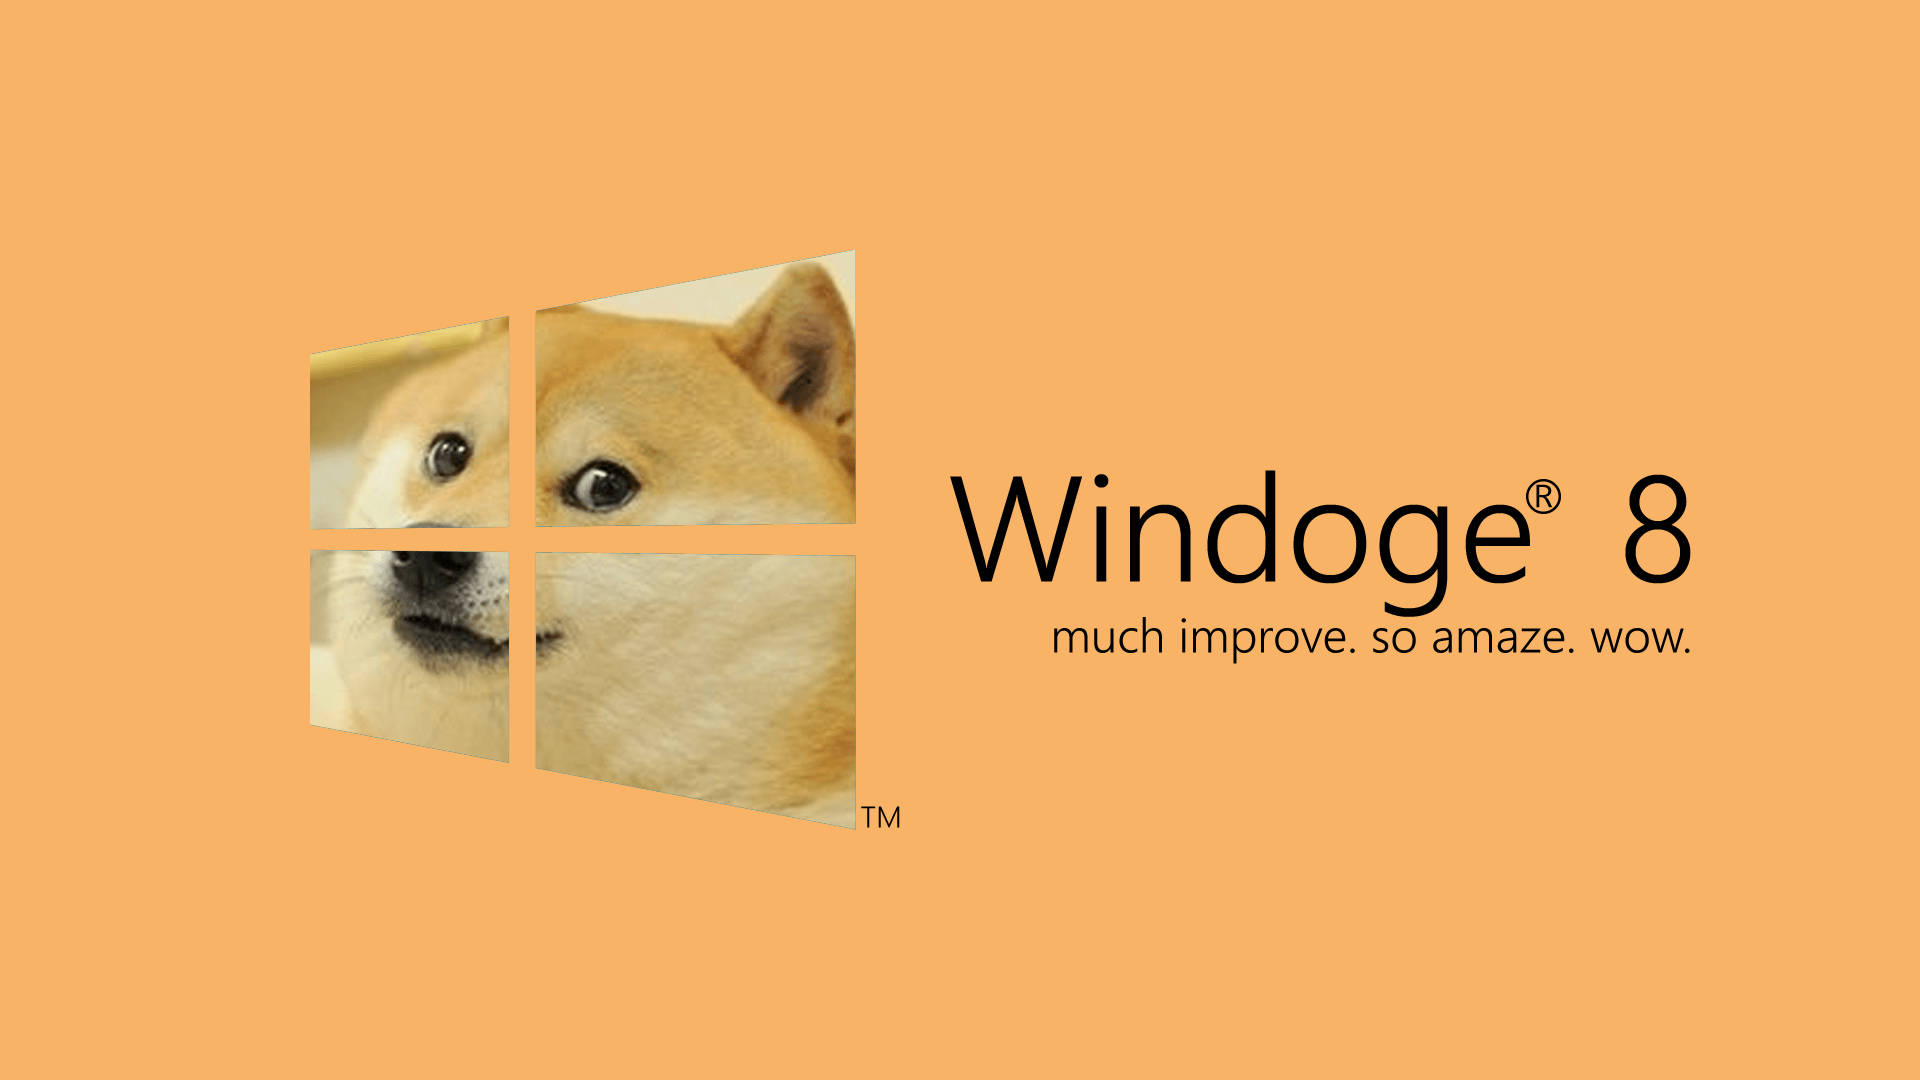 Doge Windoge 8 Meme Wallpaper